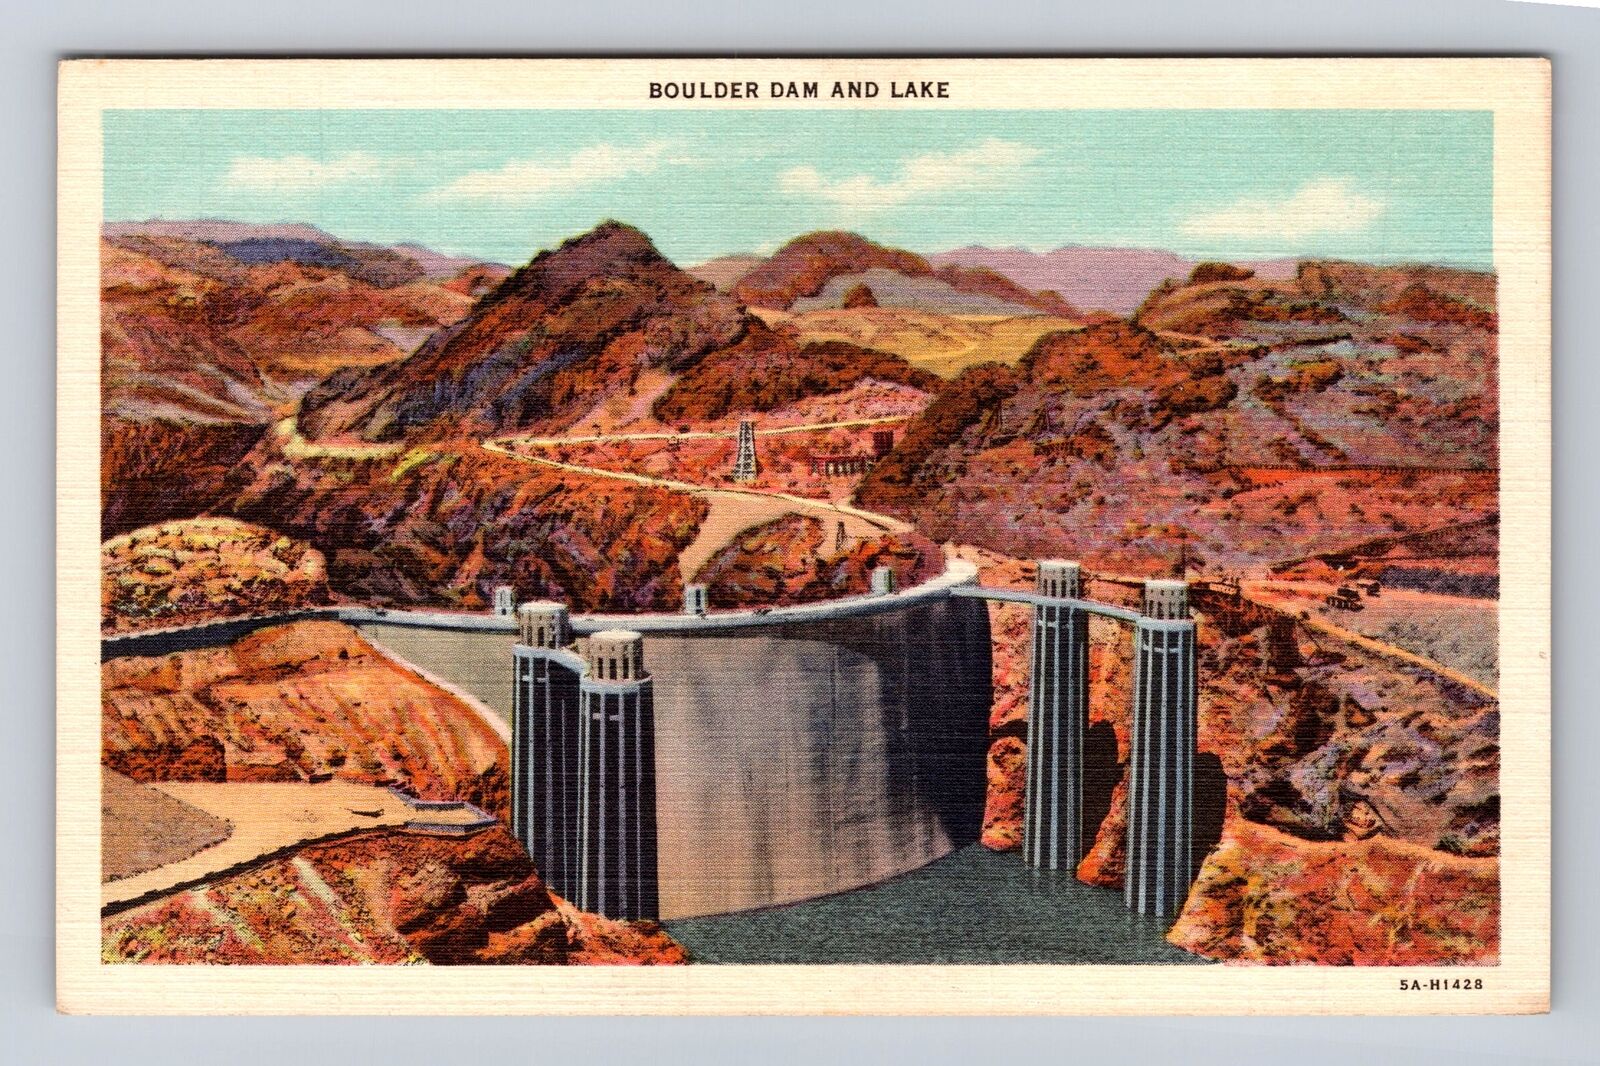 Boulder Dam And Lake NV-Nevada, Colorful Aerial View, Antique Vintage Postcard